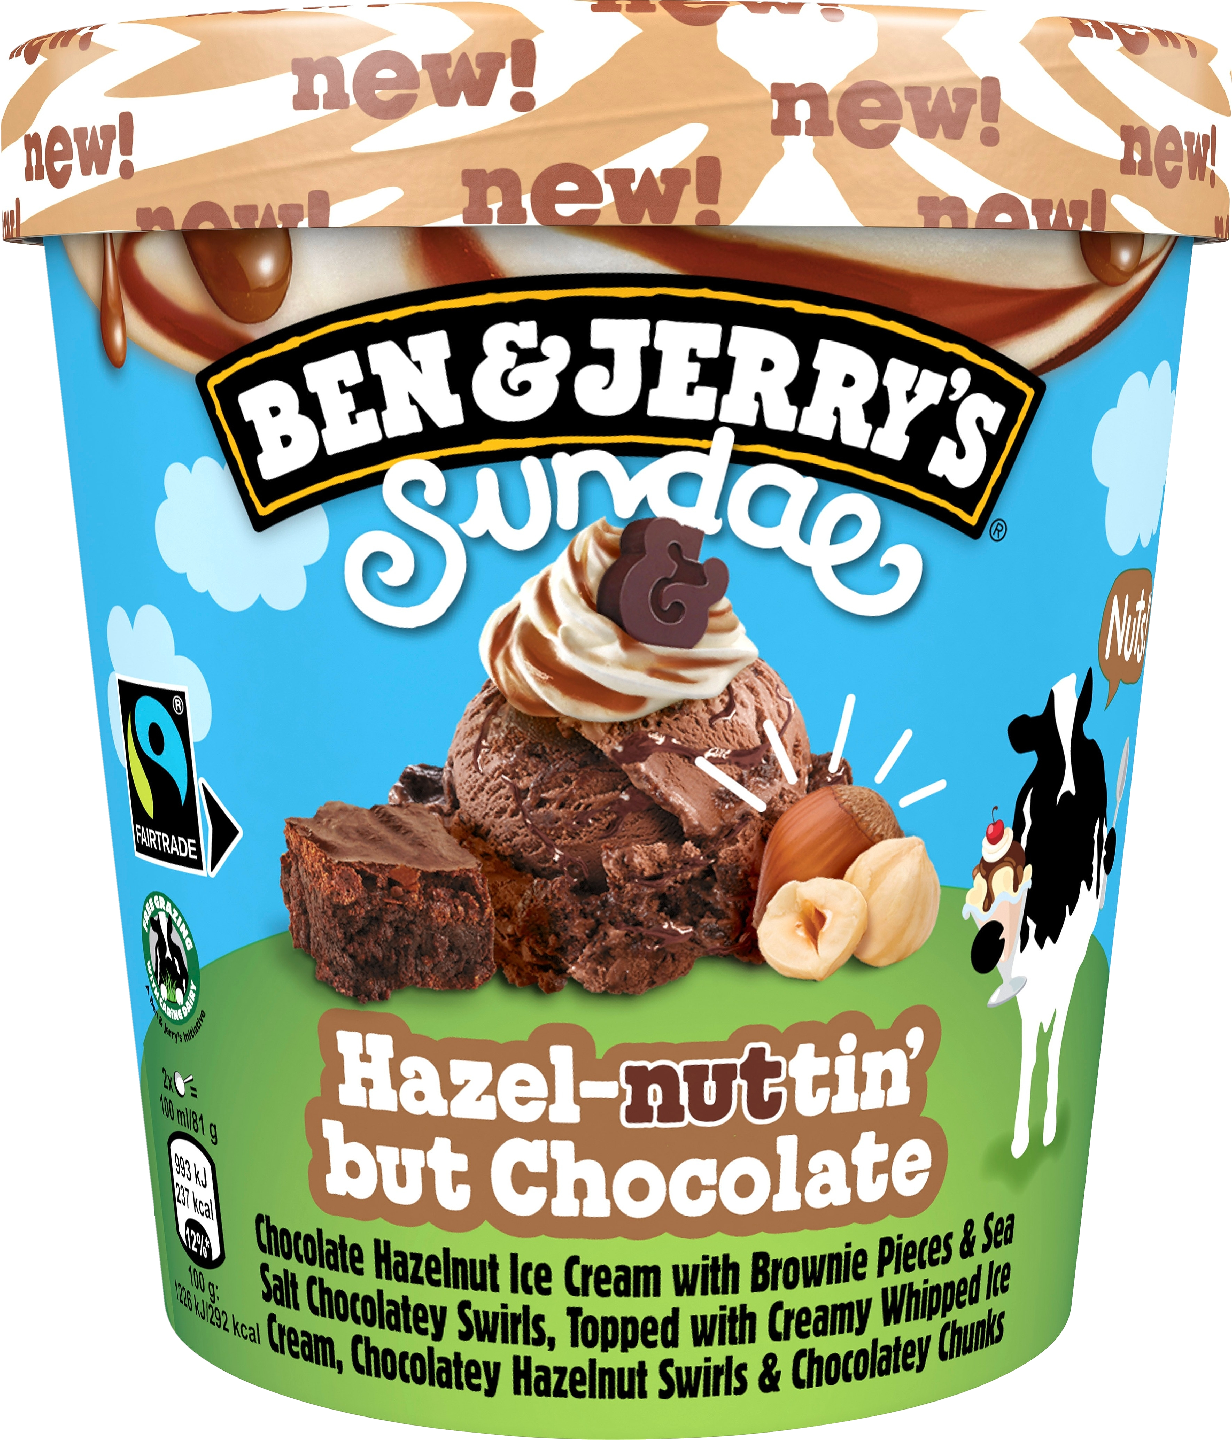 Ben & Jerry's pint-jäätelö Hazel-nuttin' but Chocolate 427ml/344g